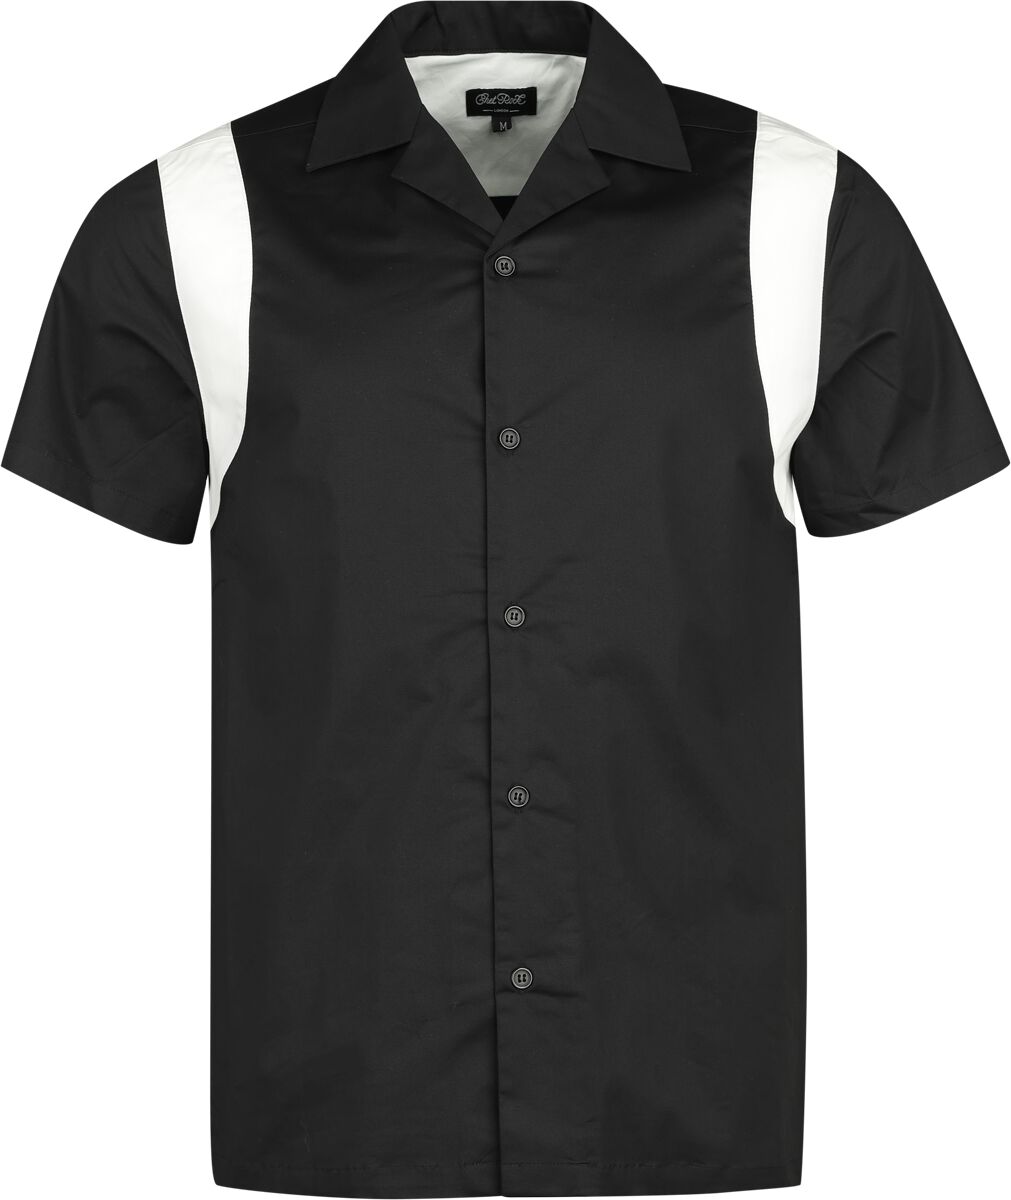 Chet Rock Marty Bowling Shirt Kurzarmhemd schwarz weiß in M